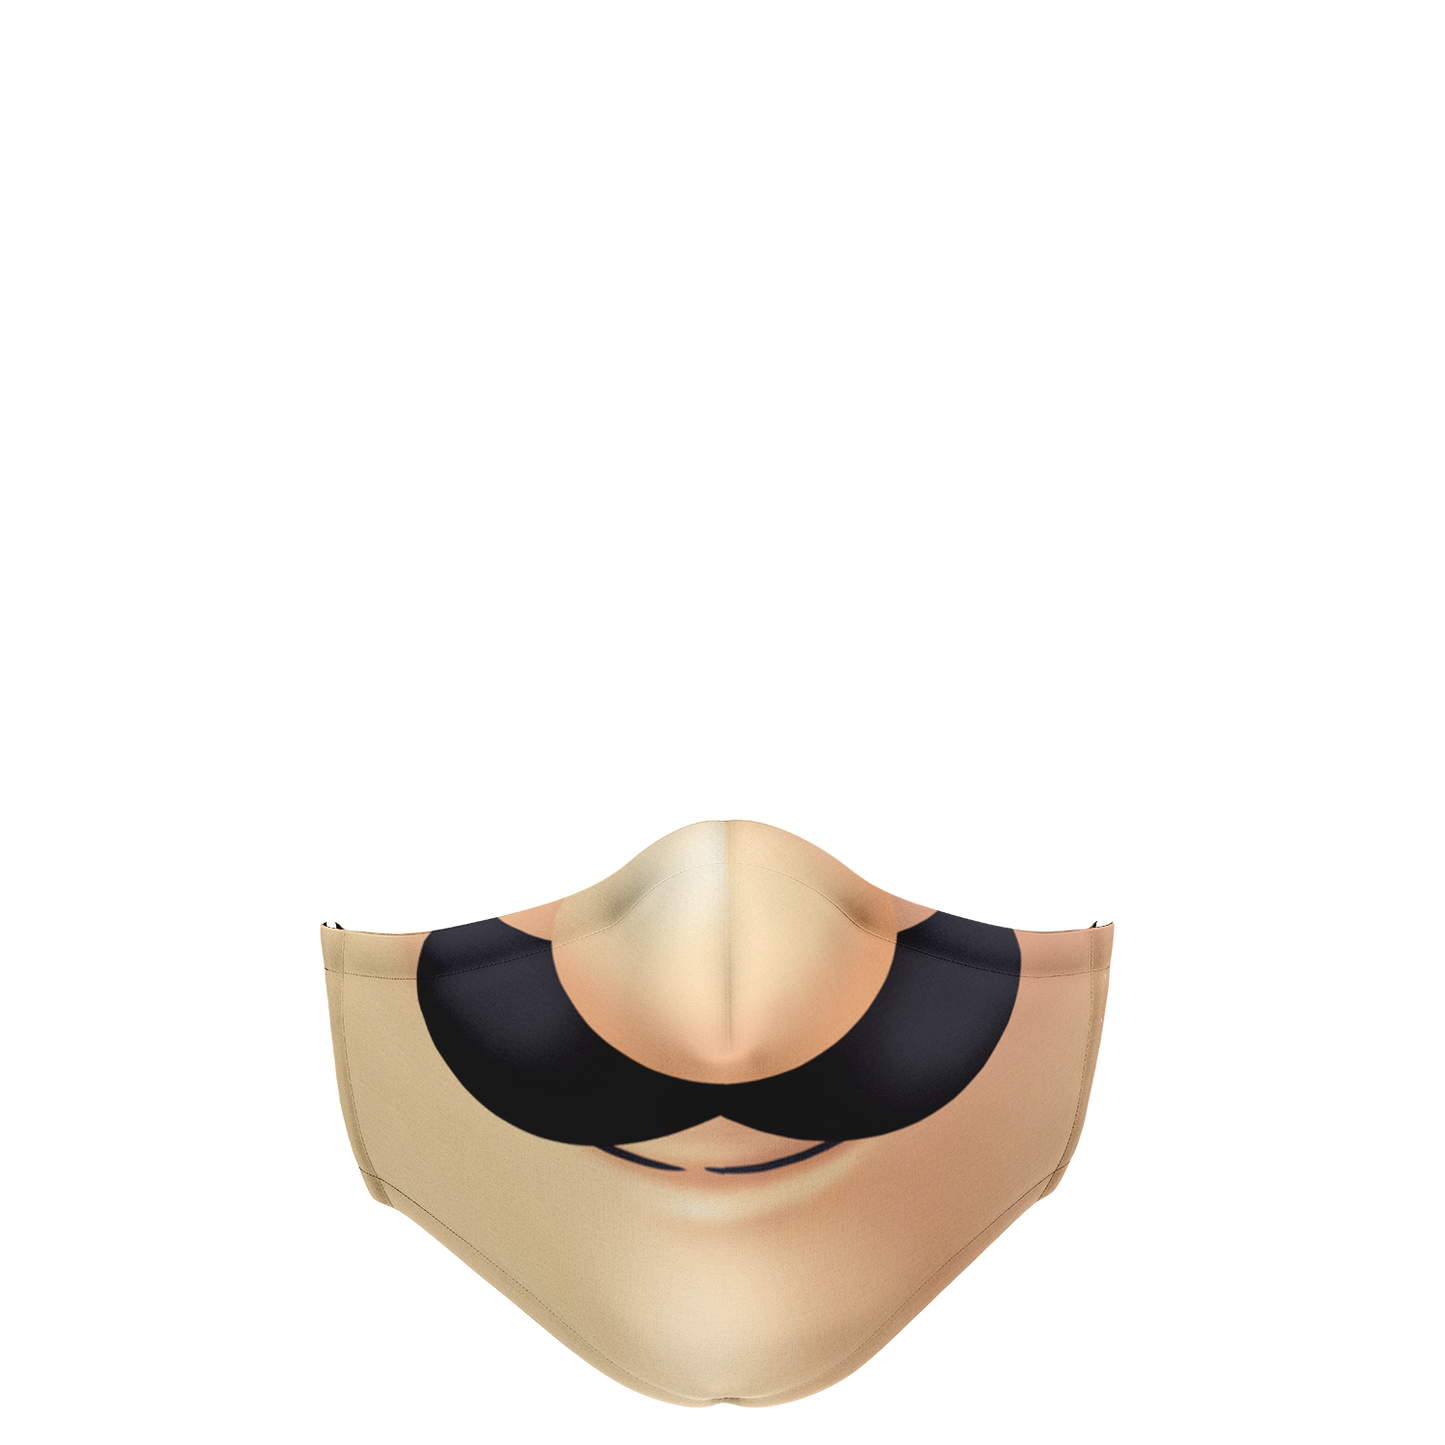 GU 'Luigi' Fashion Mask